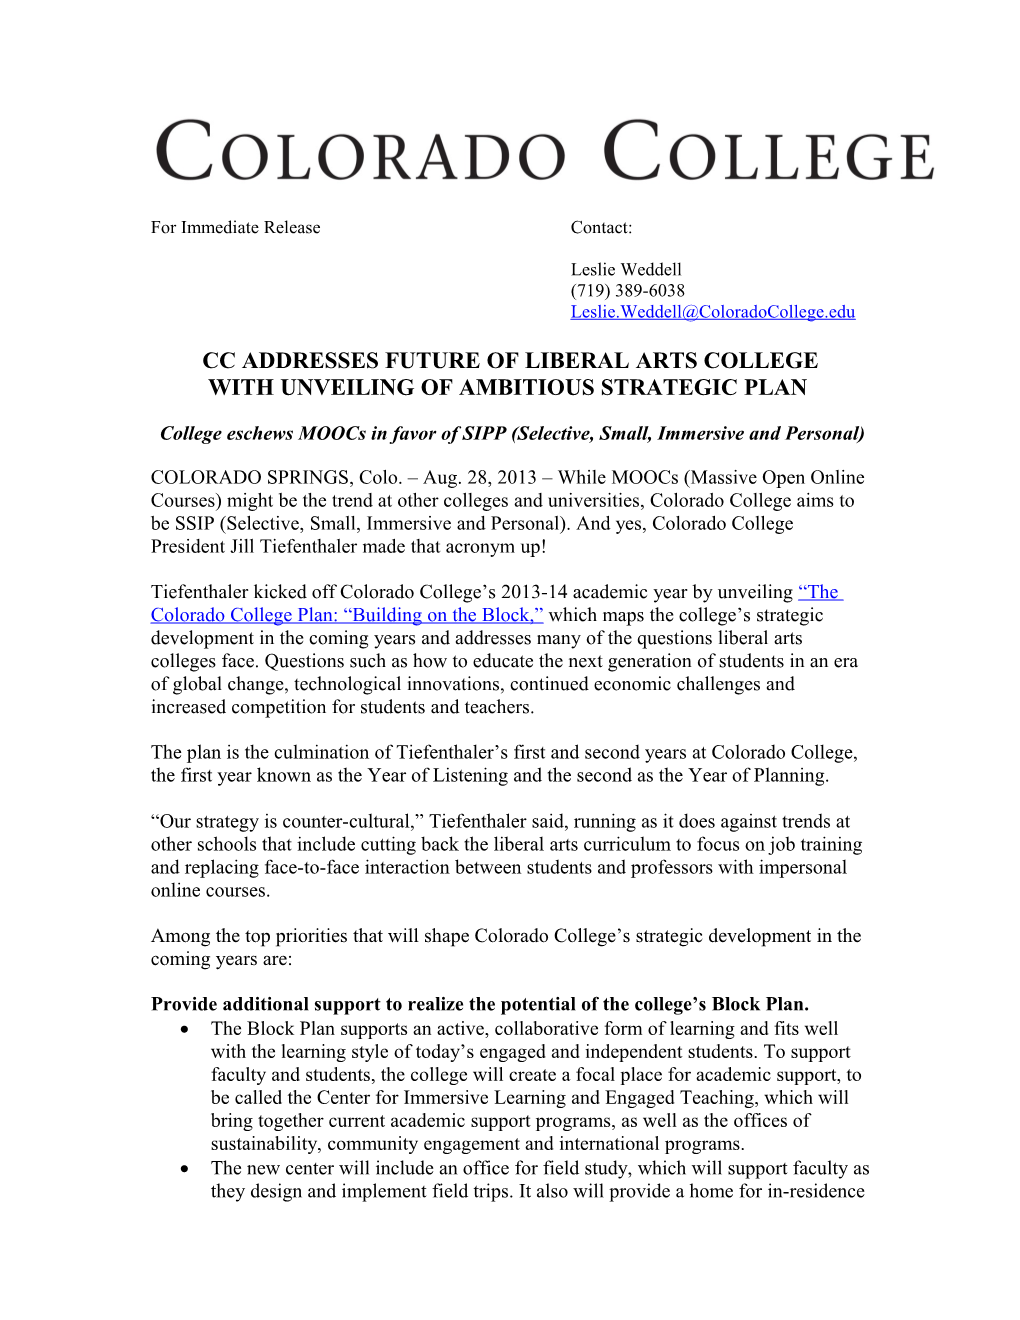 Cc Addresses Future of Liberal Arts College